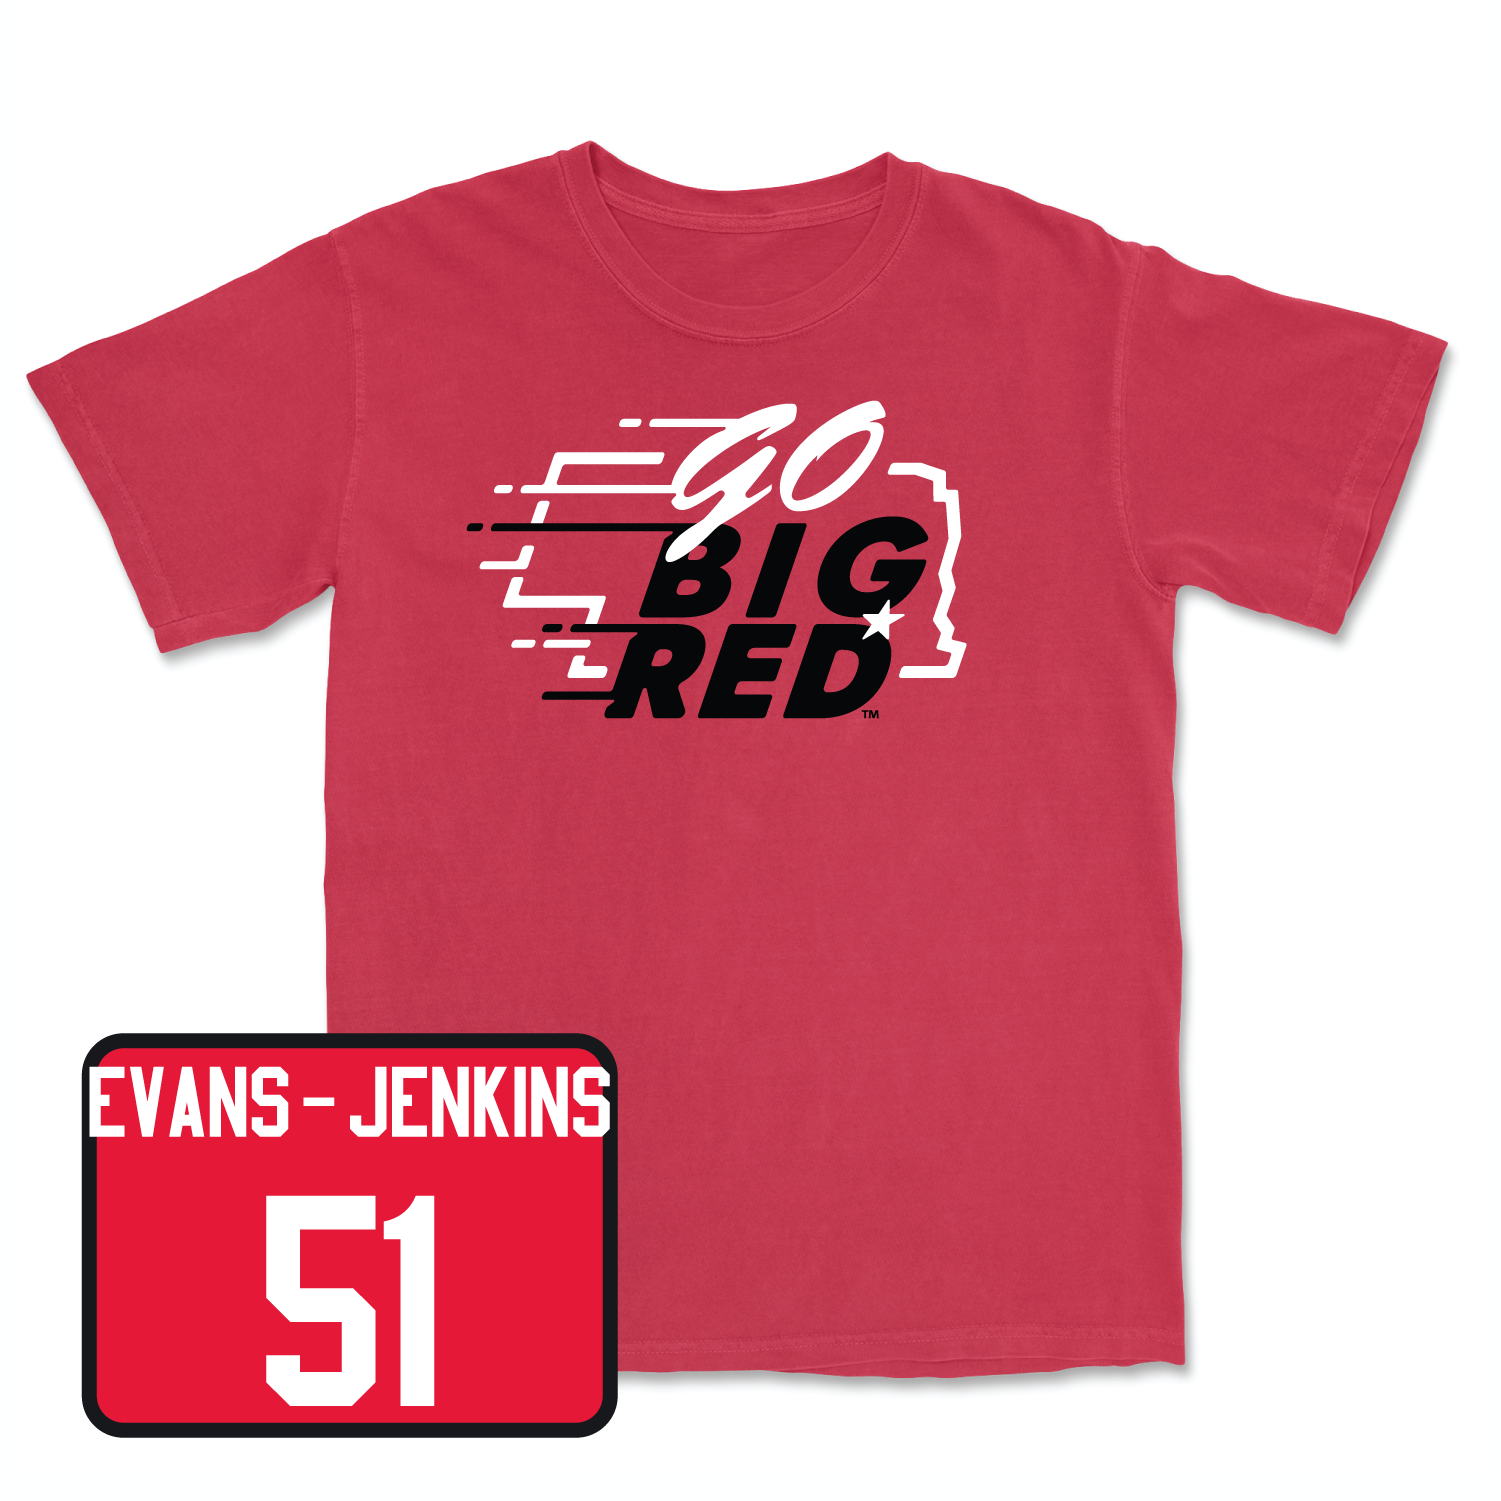 Red Football GBR Tee 6 4X-Large / Justin Evans-Jenkins | #51